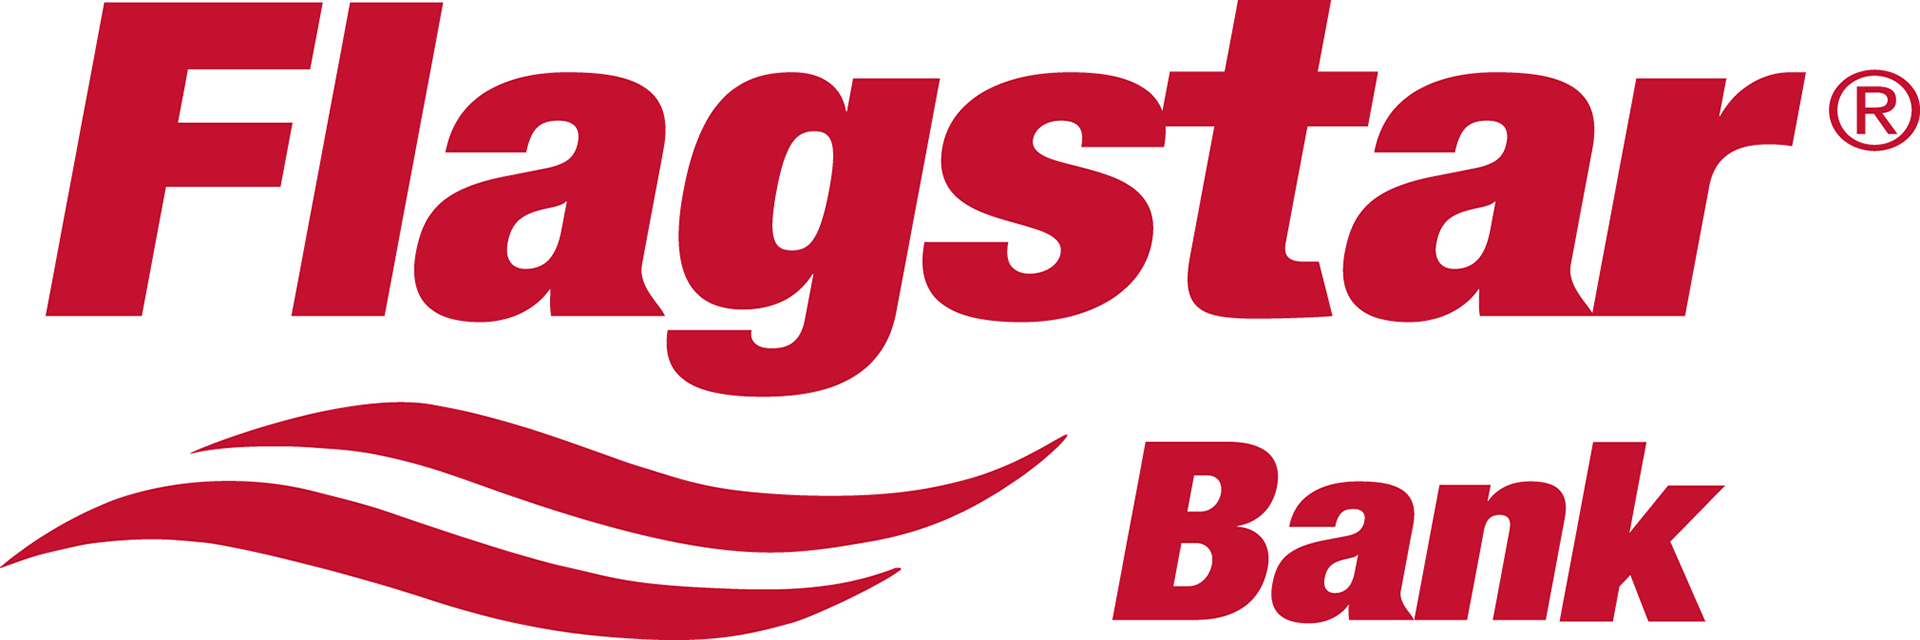 Flagstar Bank, N.A. logo